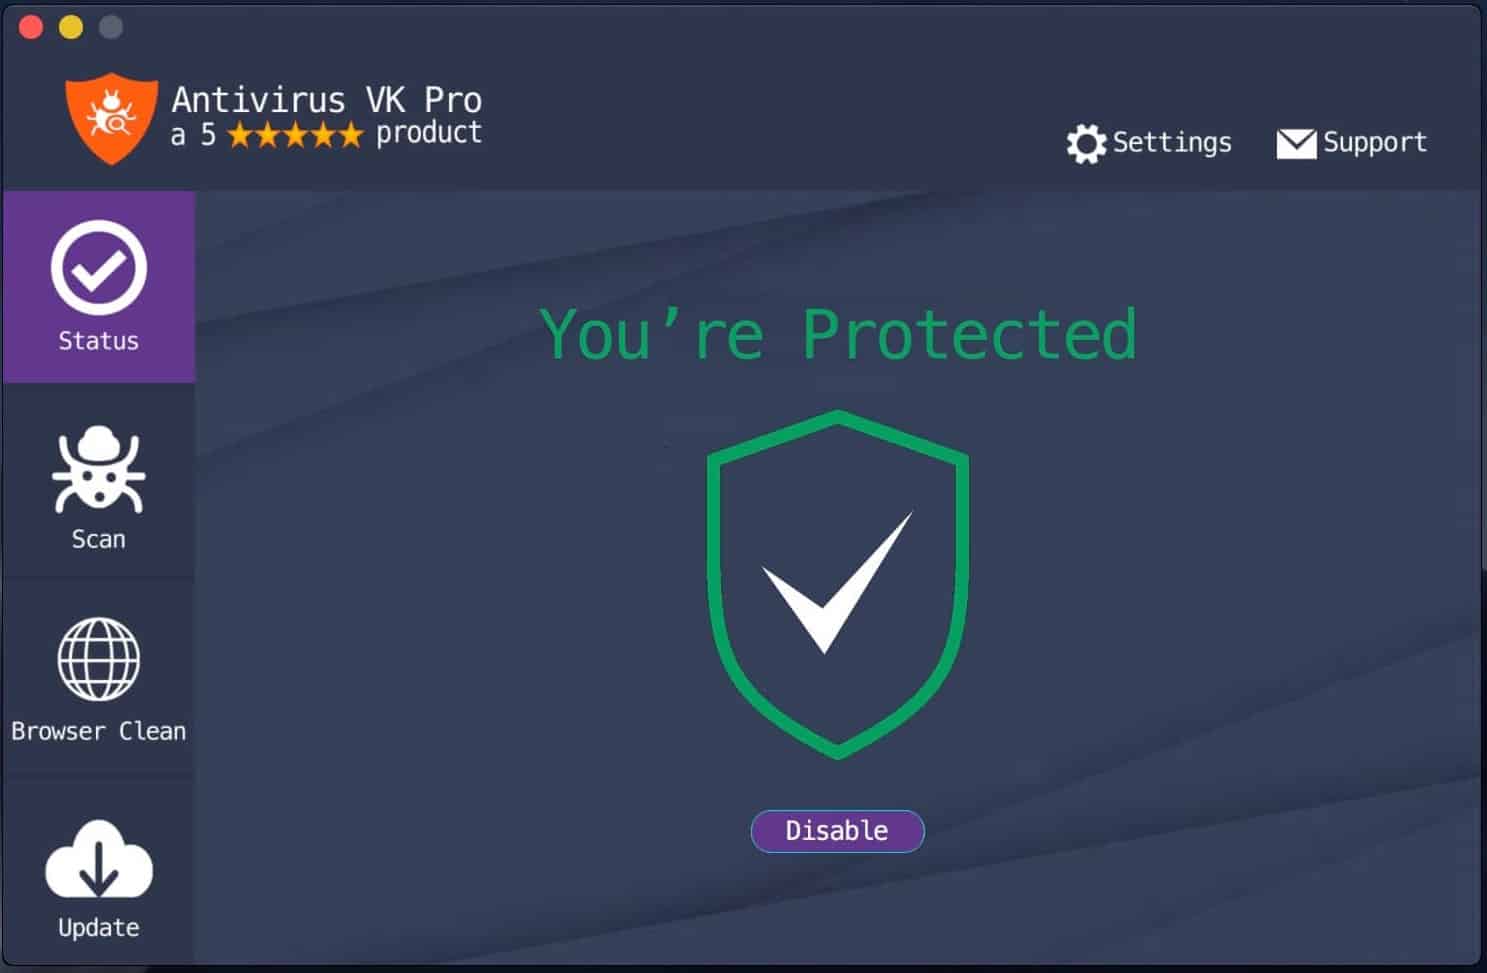 Antivirus VK Pro